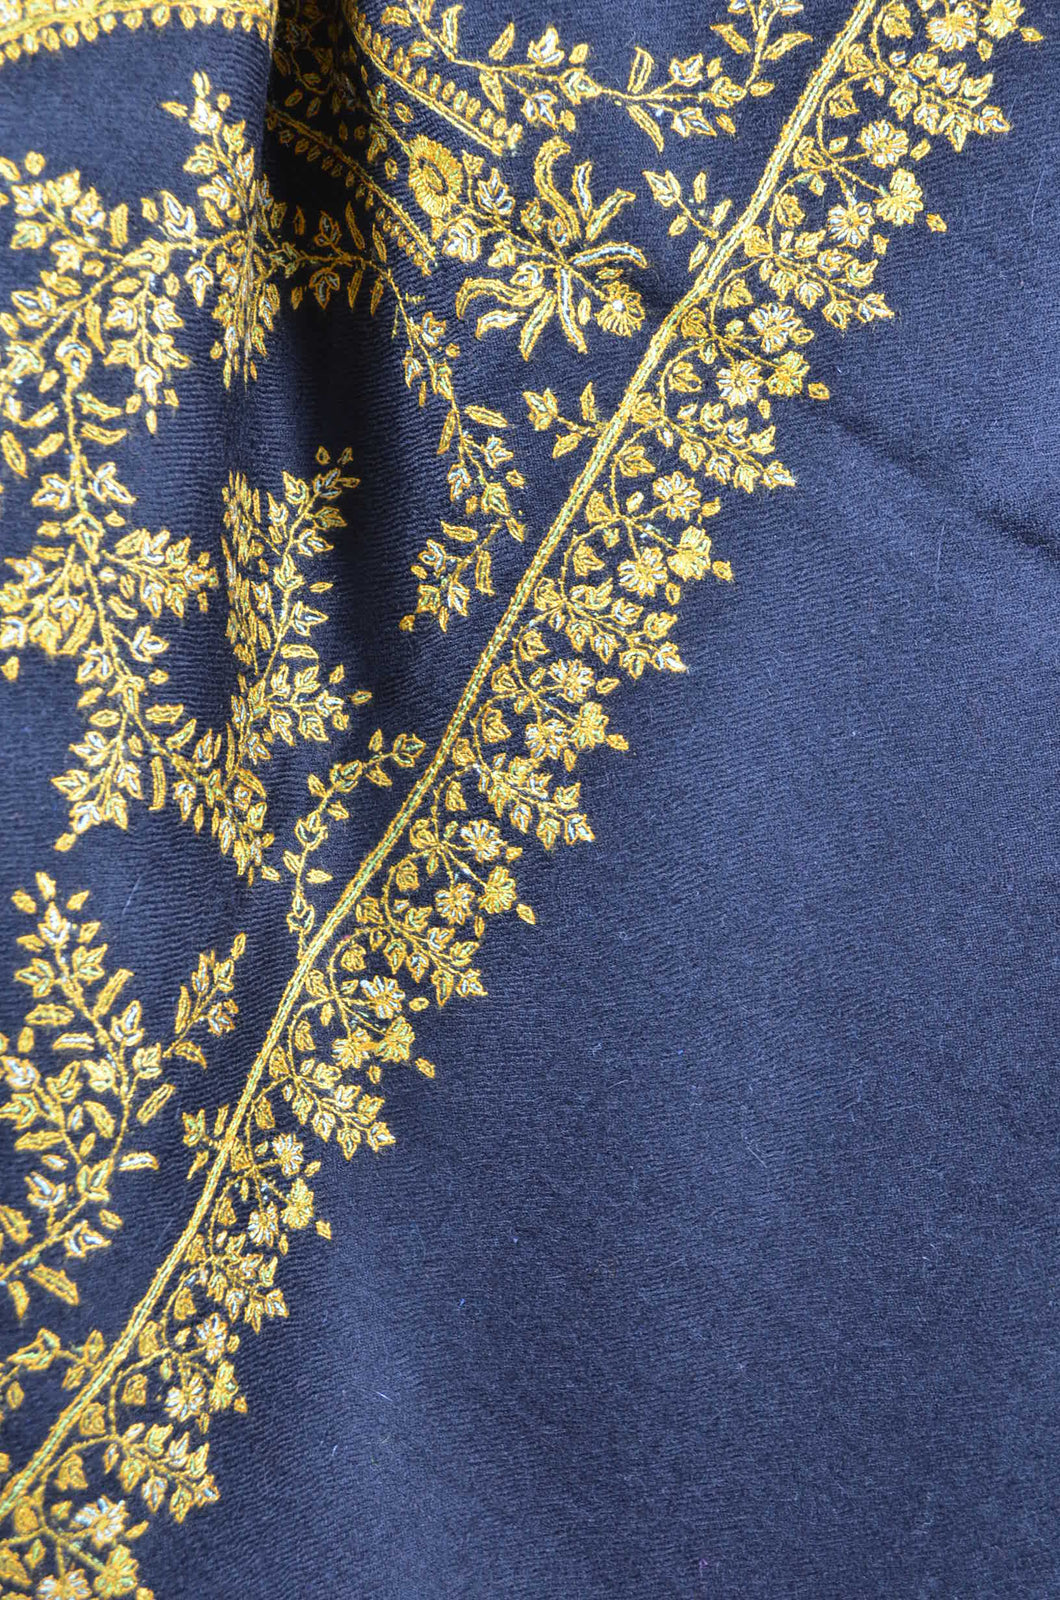 Black Base Golden Embroidery Cashmere Pashmina Scarf